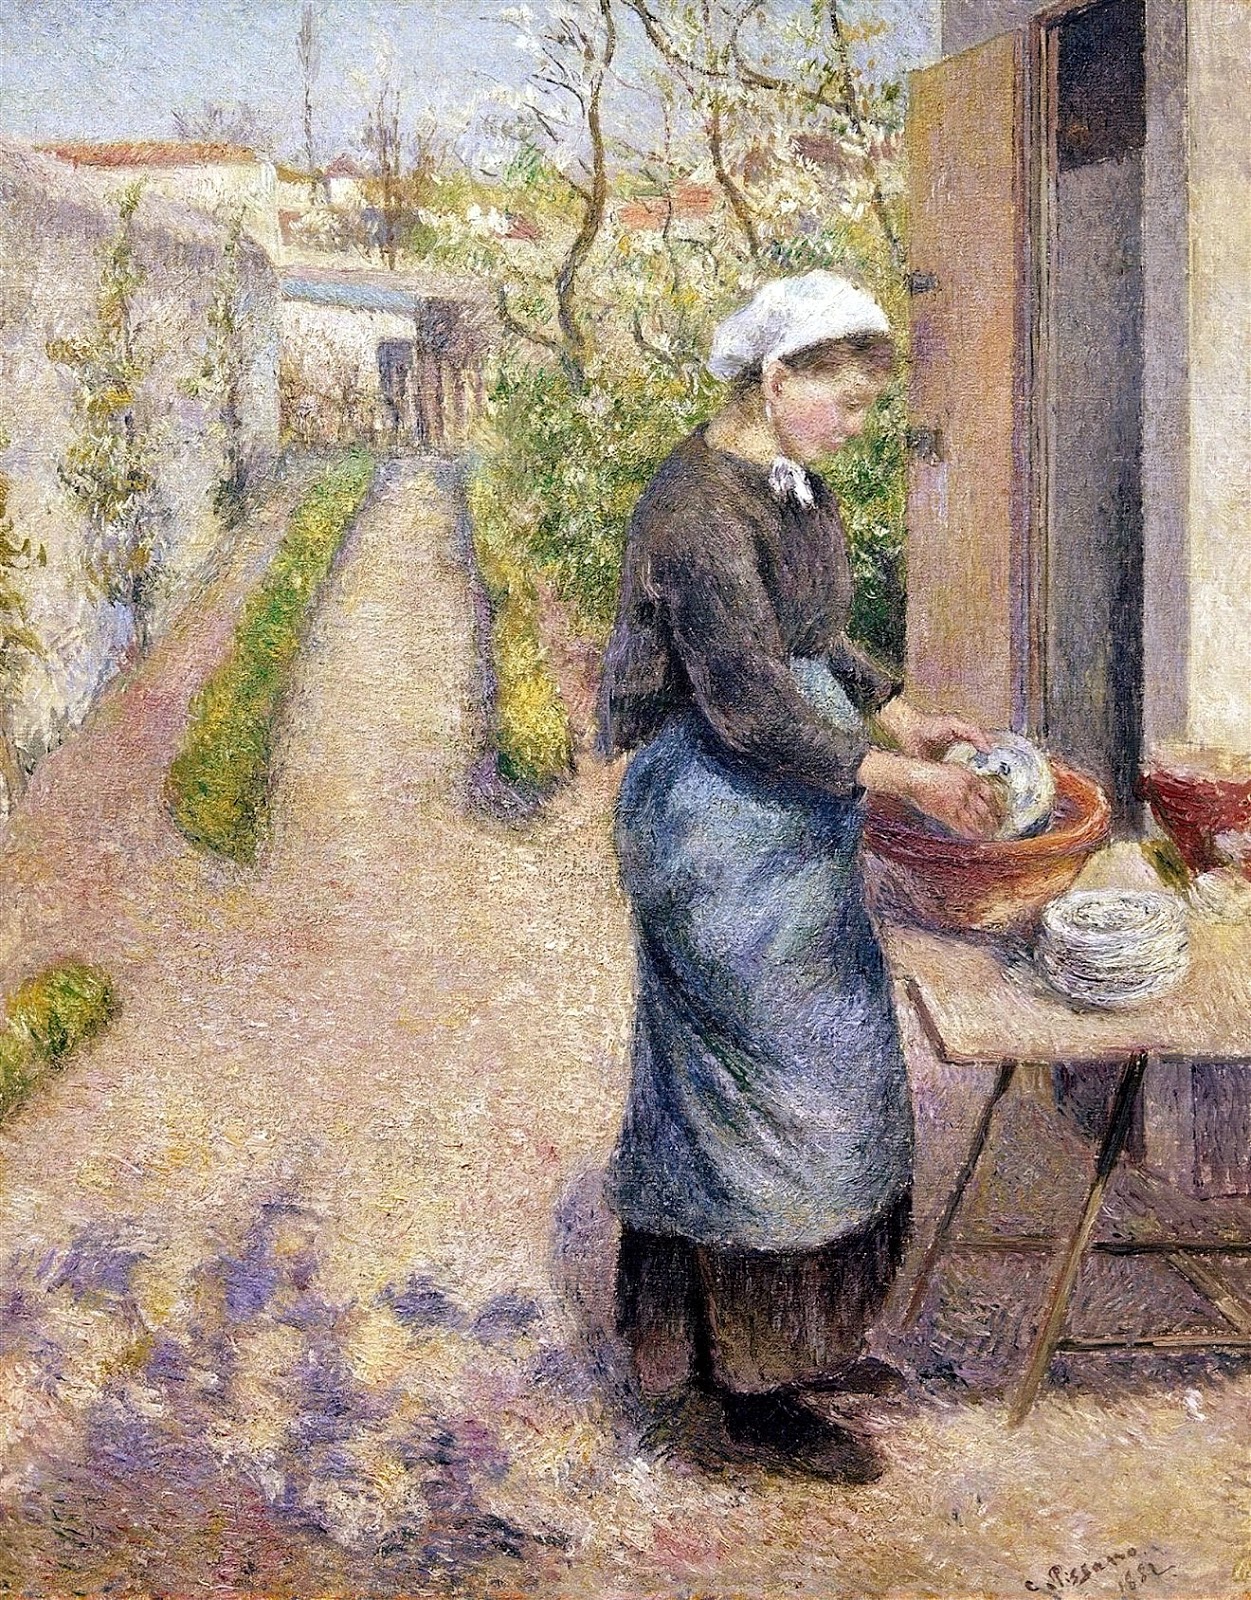 Camille+Pissarro-1830-1903 (249).jpg